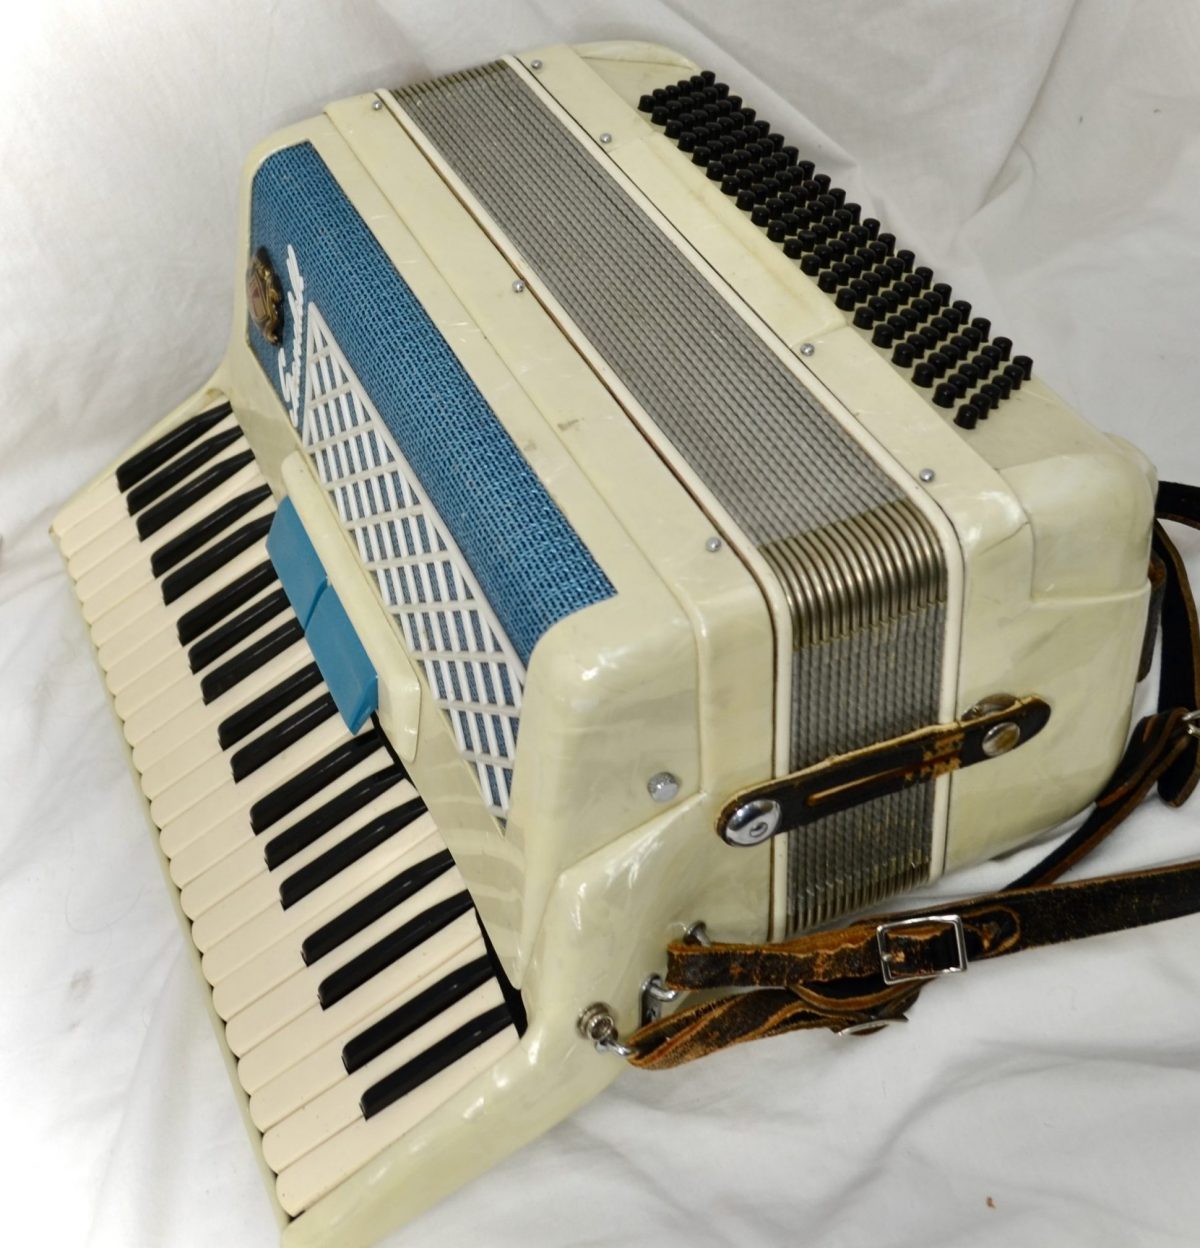 scandalli accordion